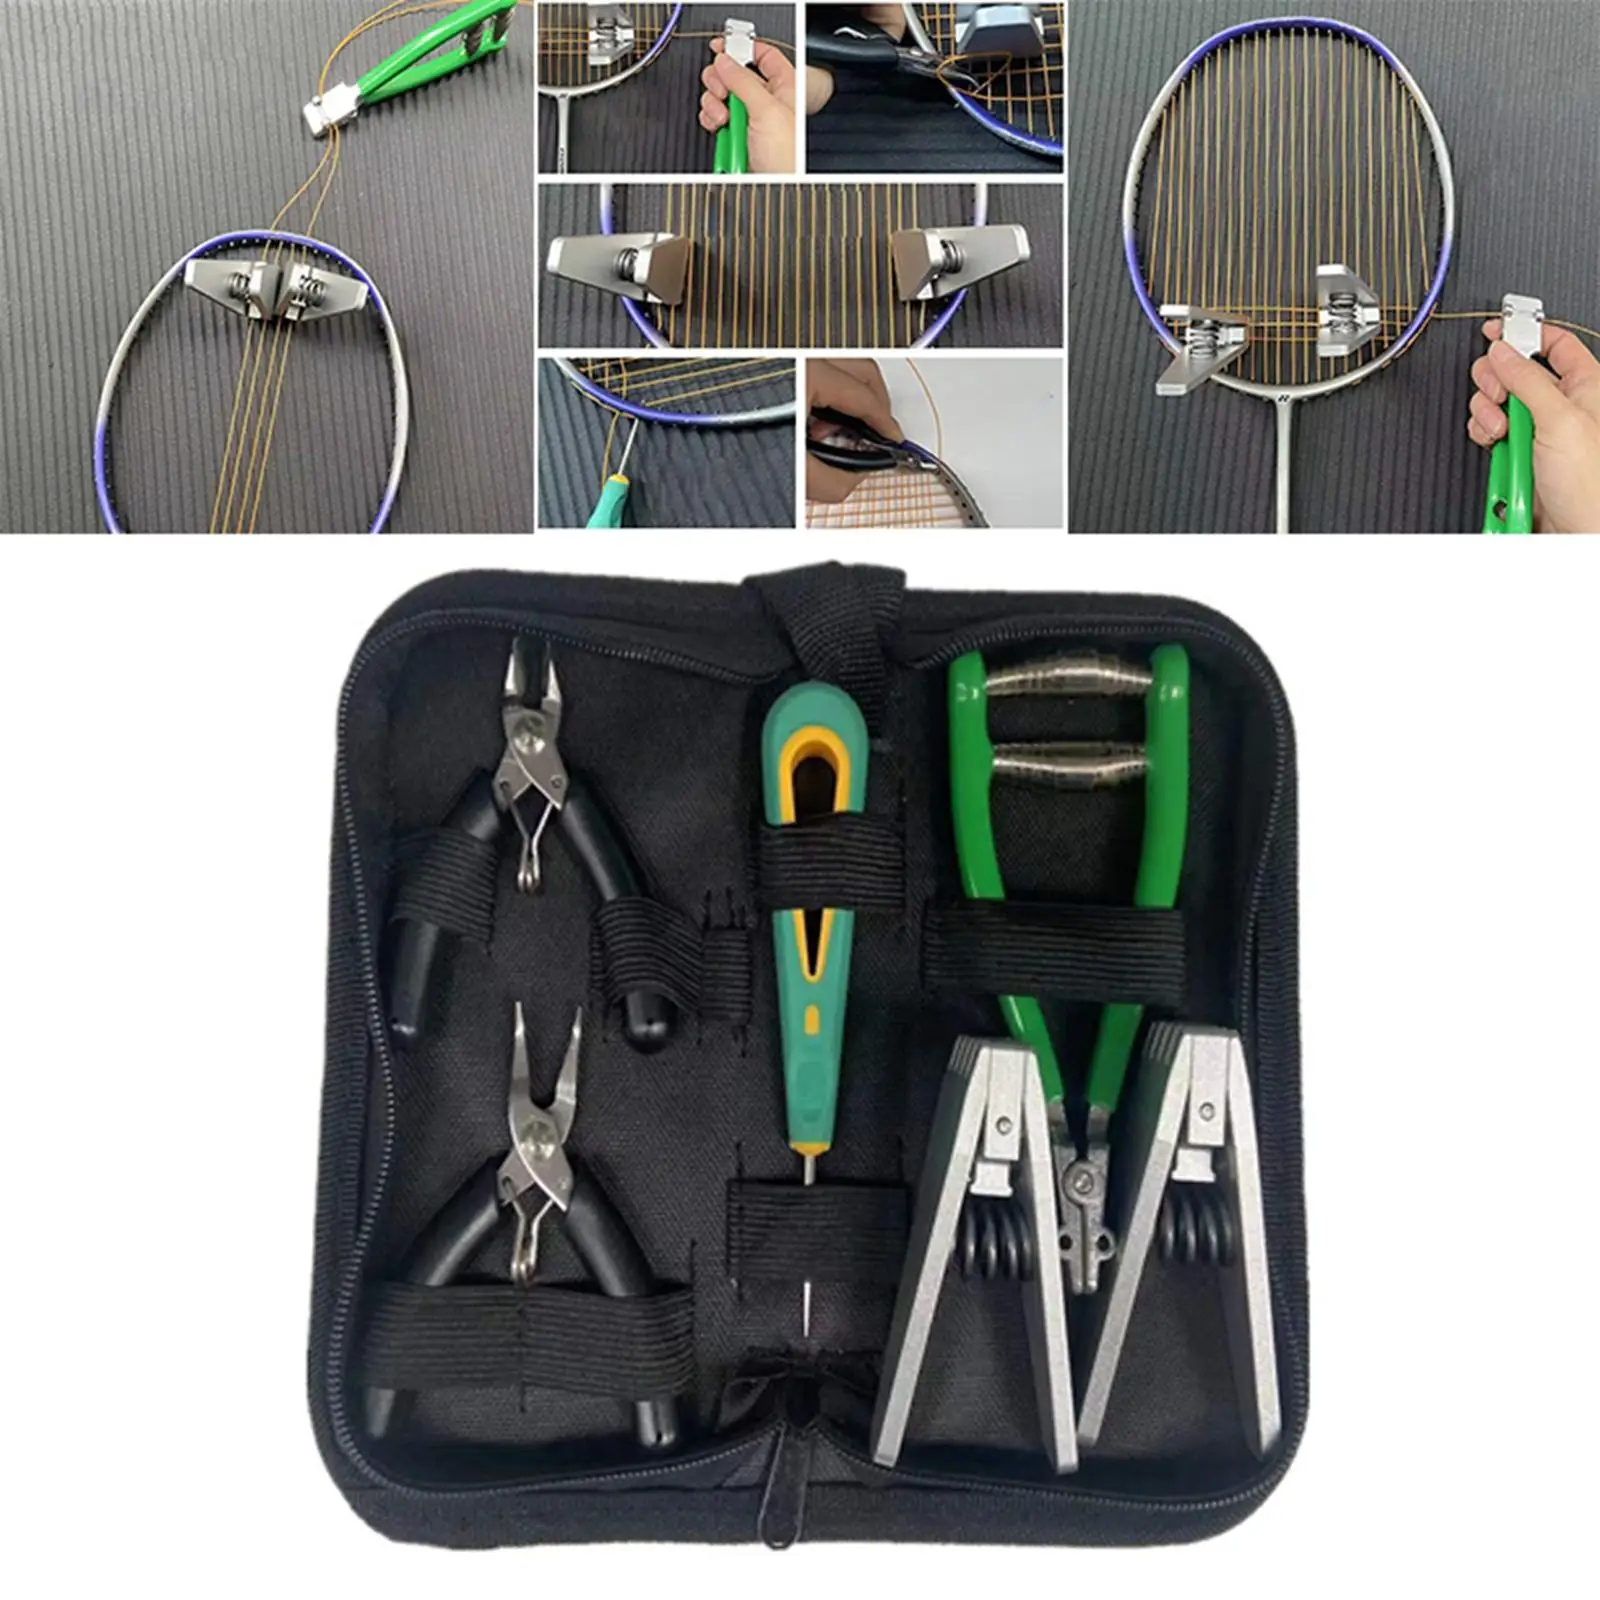 Portable Starting Stringing Clamp Tool Kit Badminton Tennis Racquet Squash